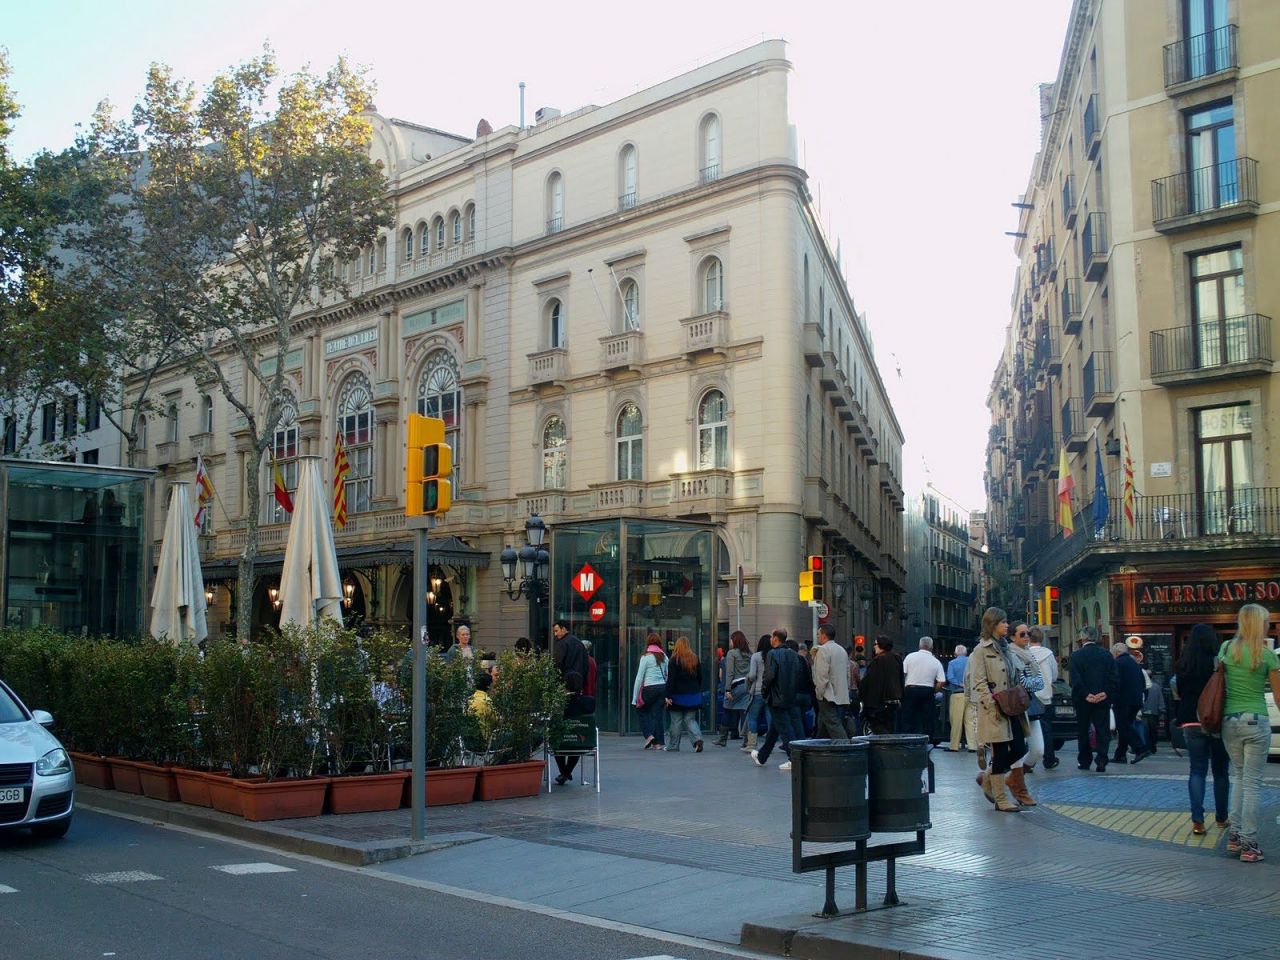 Café, restaurant à Barcelone, Espagne - image 1